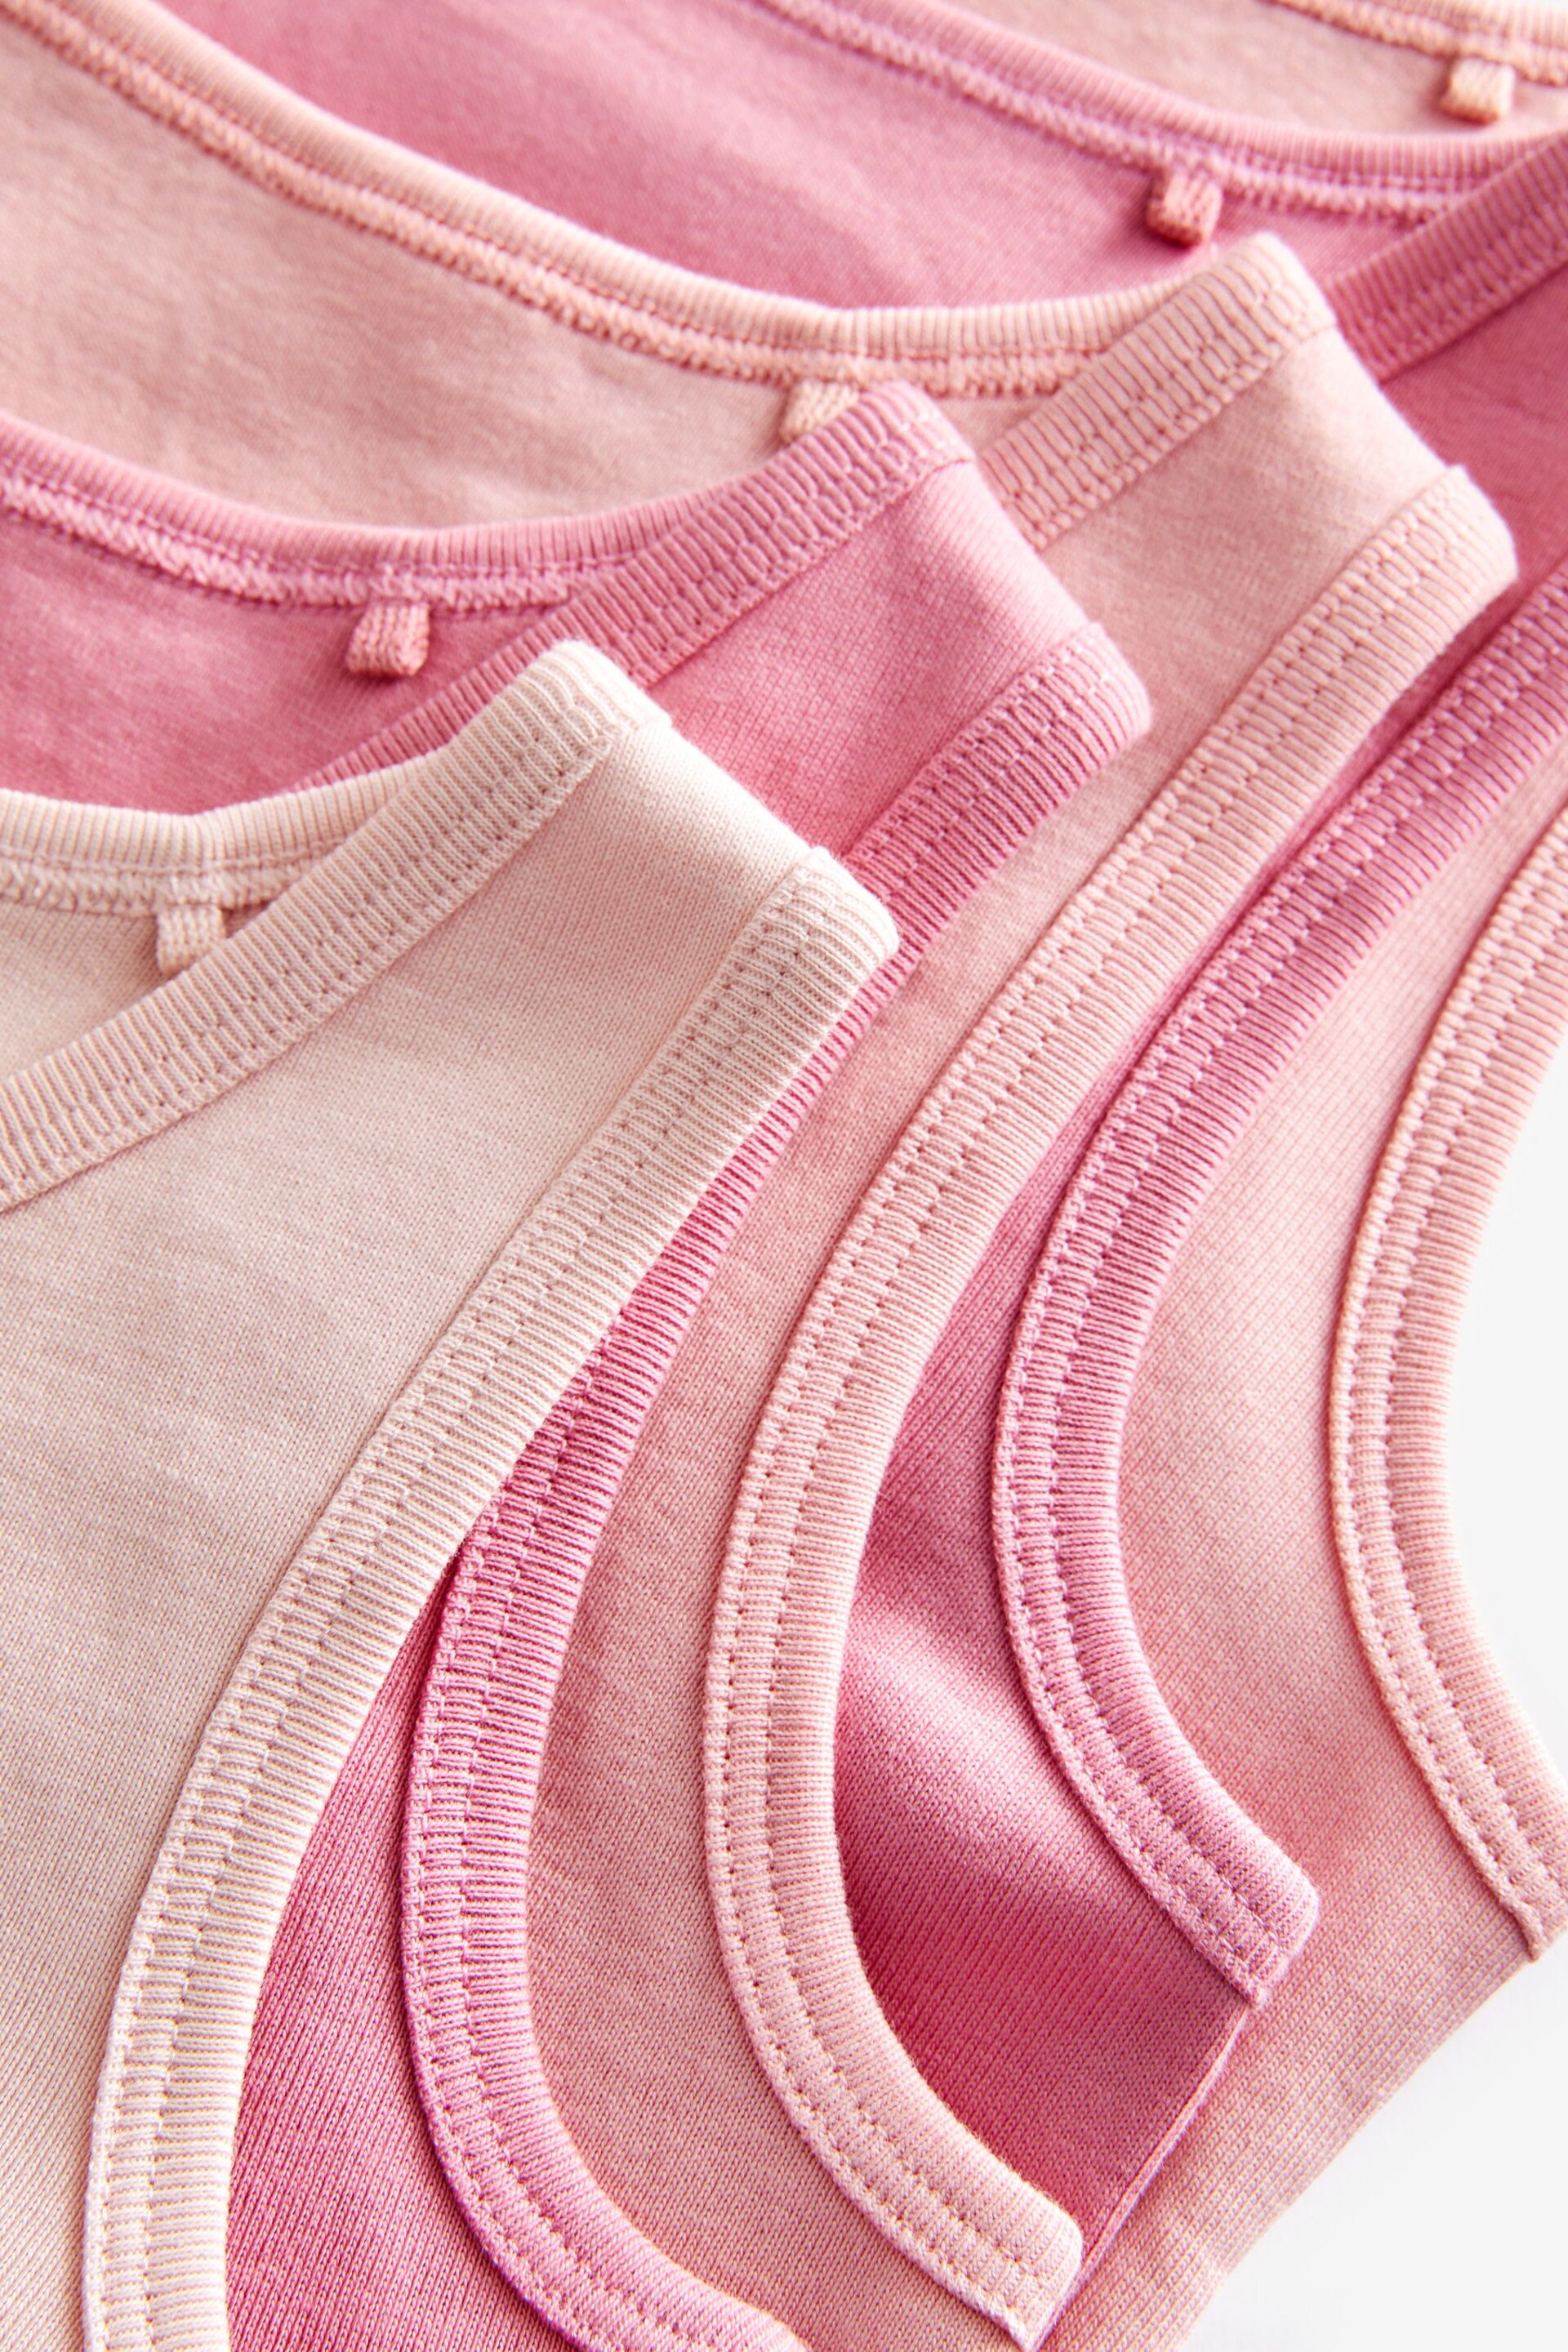 Multi Pastel Pink Vest 5 Pack (1.5-16yrs) - Image 8 of 8